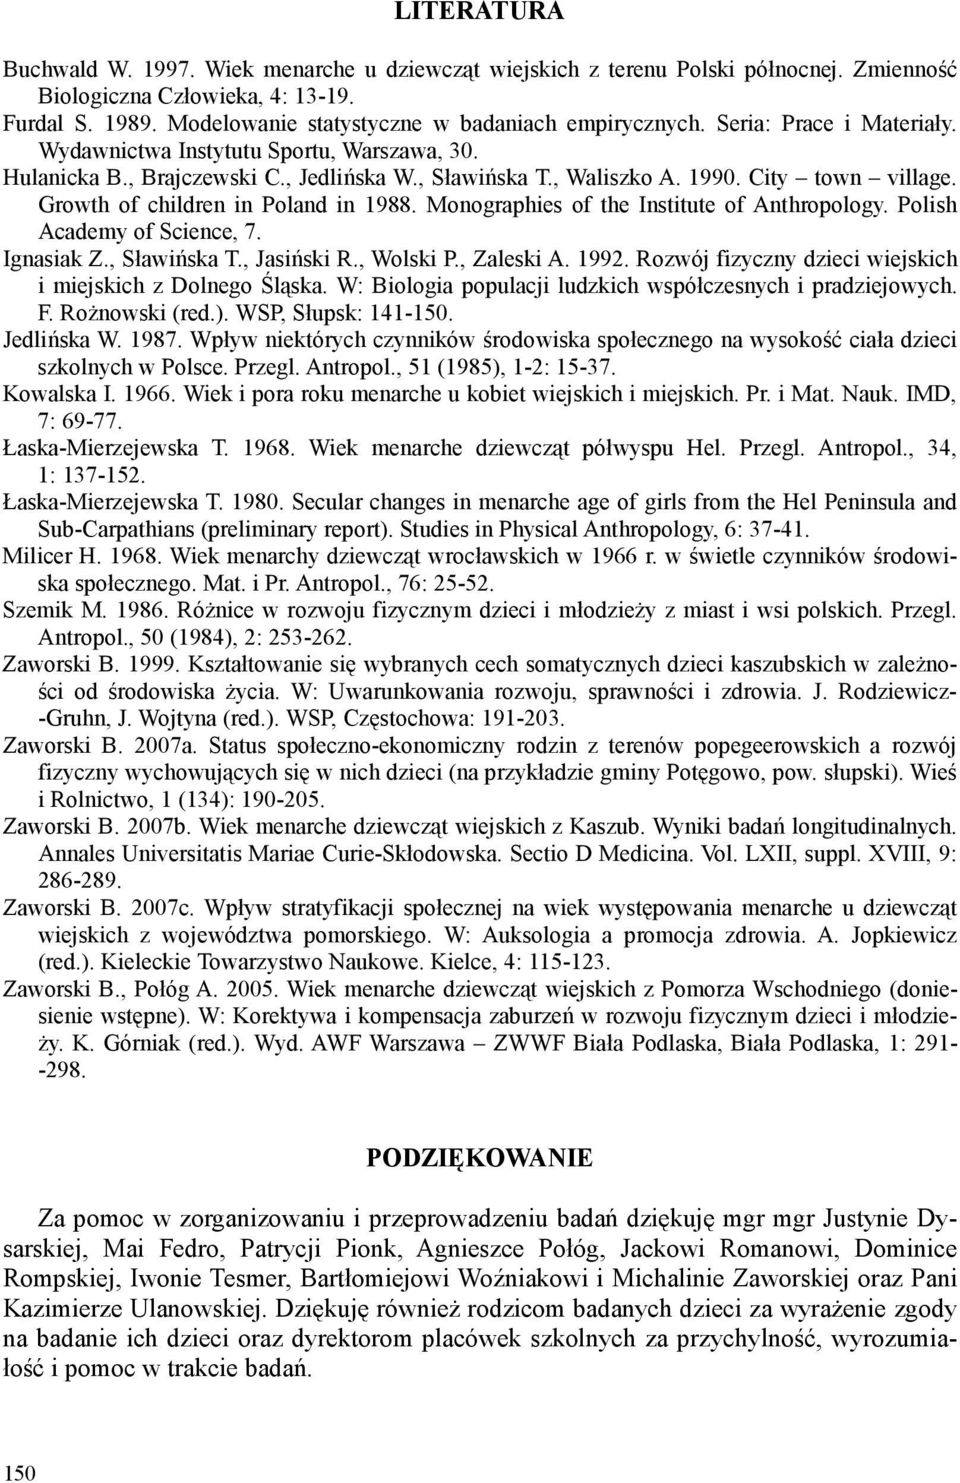 City town village. Growth of children in Poland in 1988. Monographies of the Institute of Anthropology. Polish Academy of Science, 7. Ignasiak Z., Sławińska T., Jasiński R., Wolski P., Zaleski A.